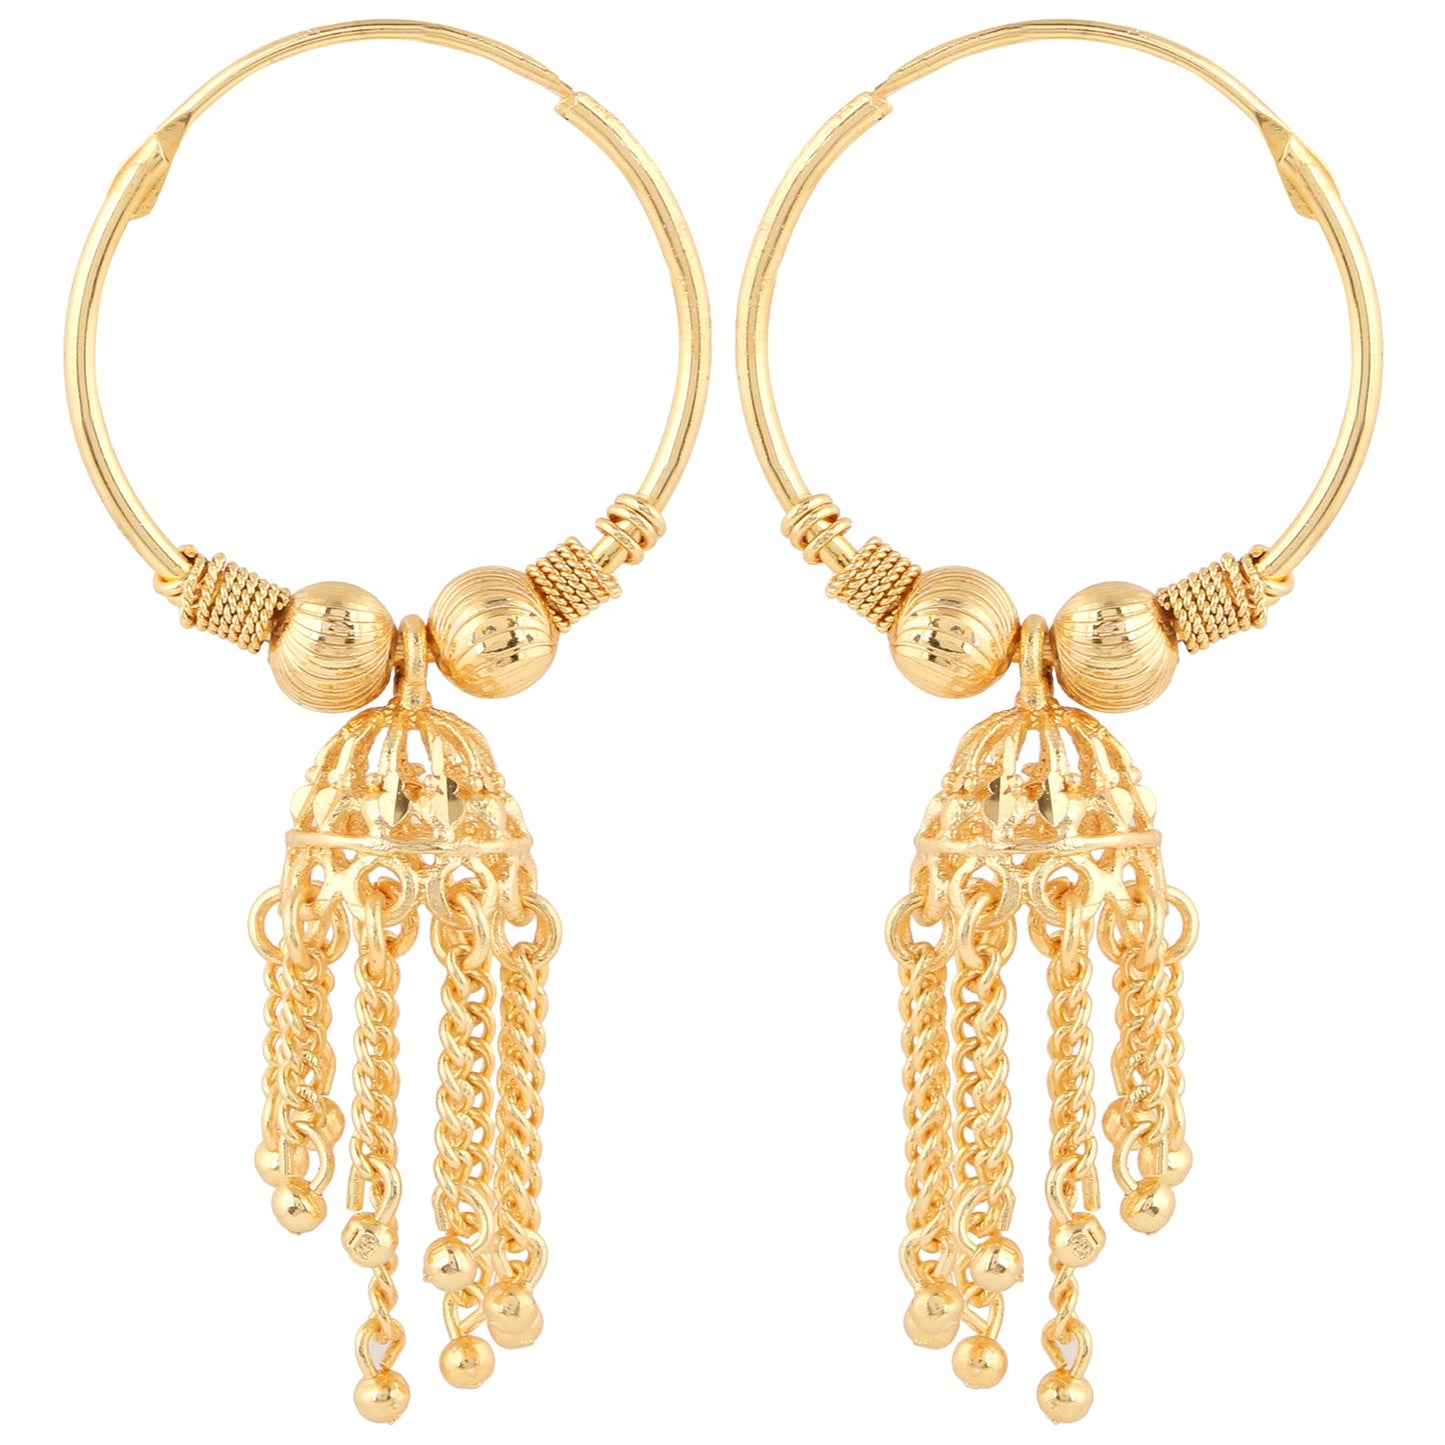 Traditional Gold Bali & Jhumki Earrings (SJ_652)